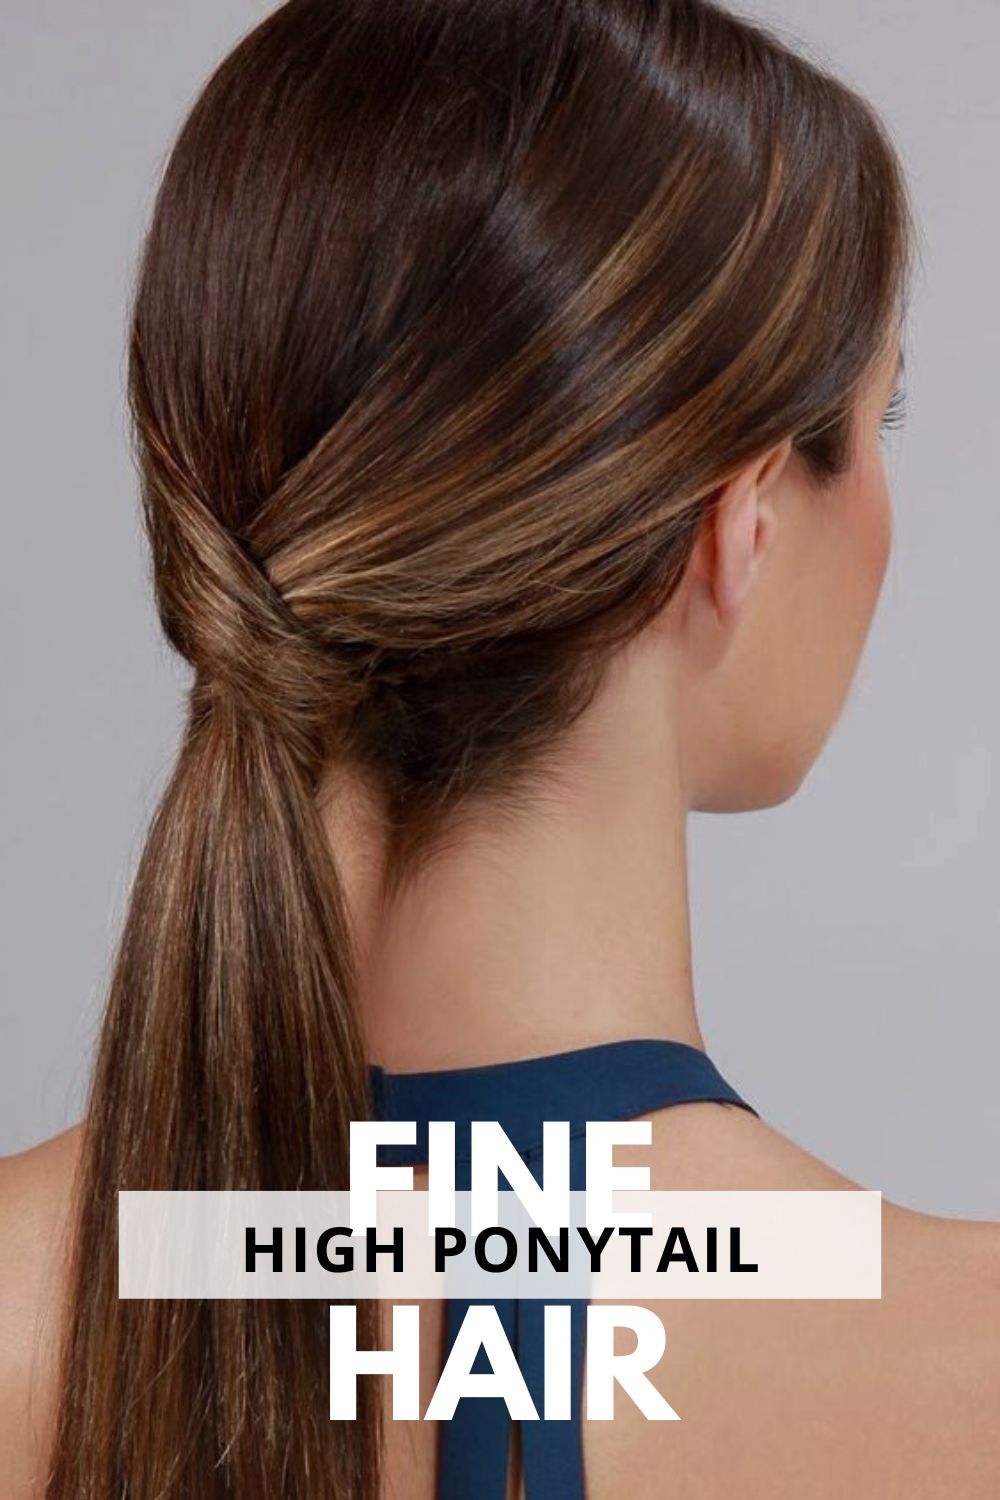 High Ponytail for Fine Hair